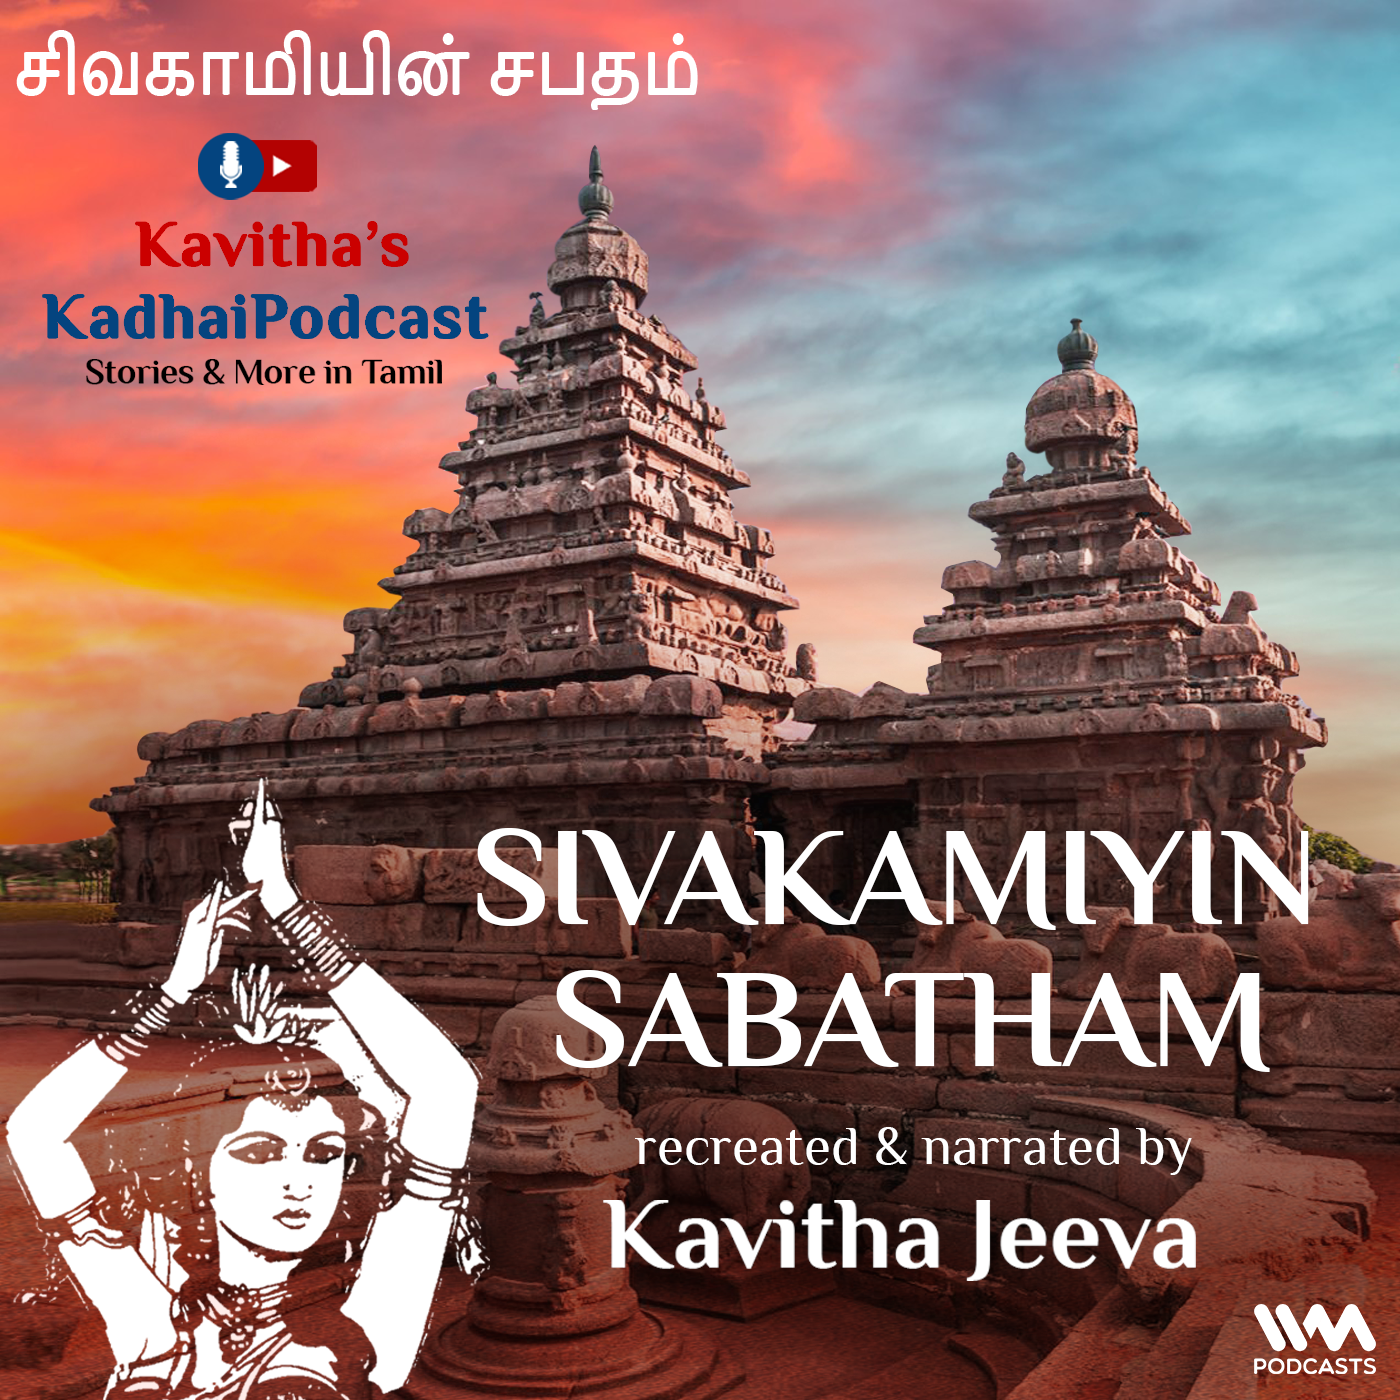 KadhaiPodcast's Sivakamiyin Sabatham with Kavitha Jeeva - Episode #98